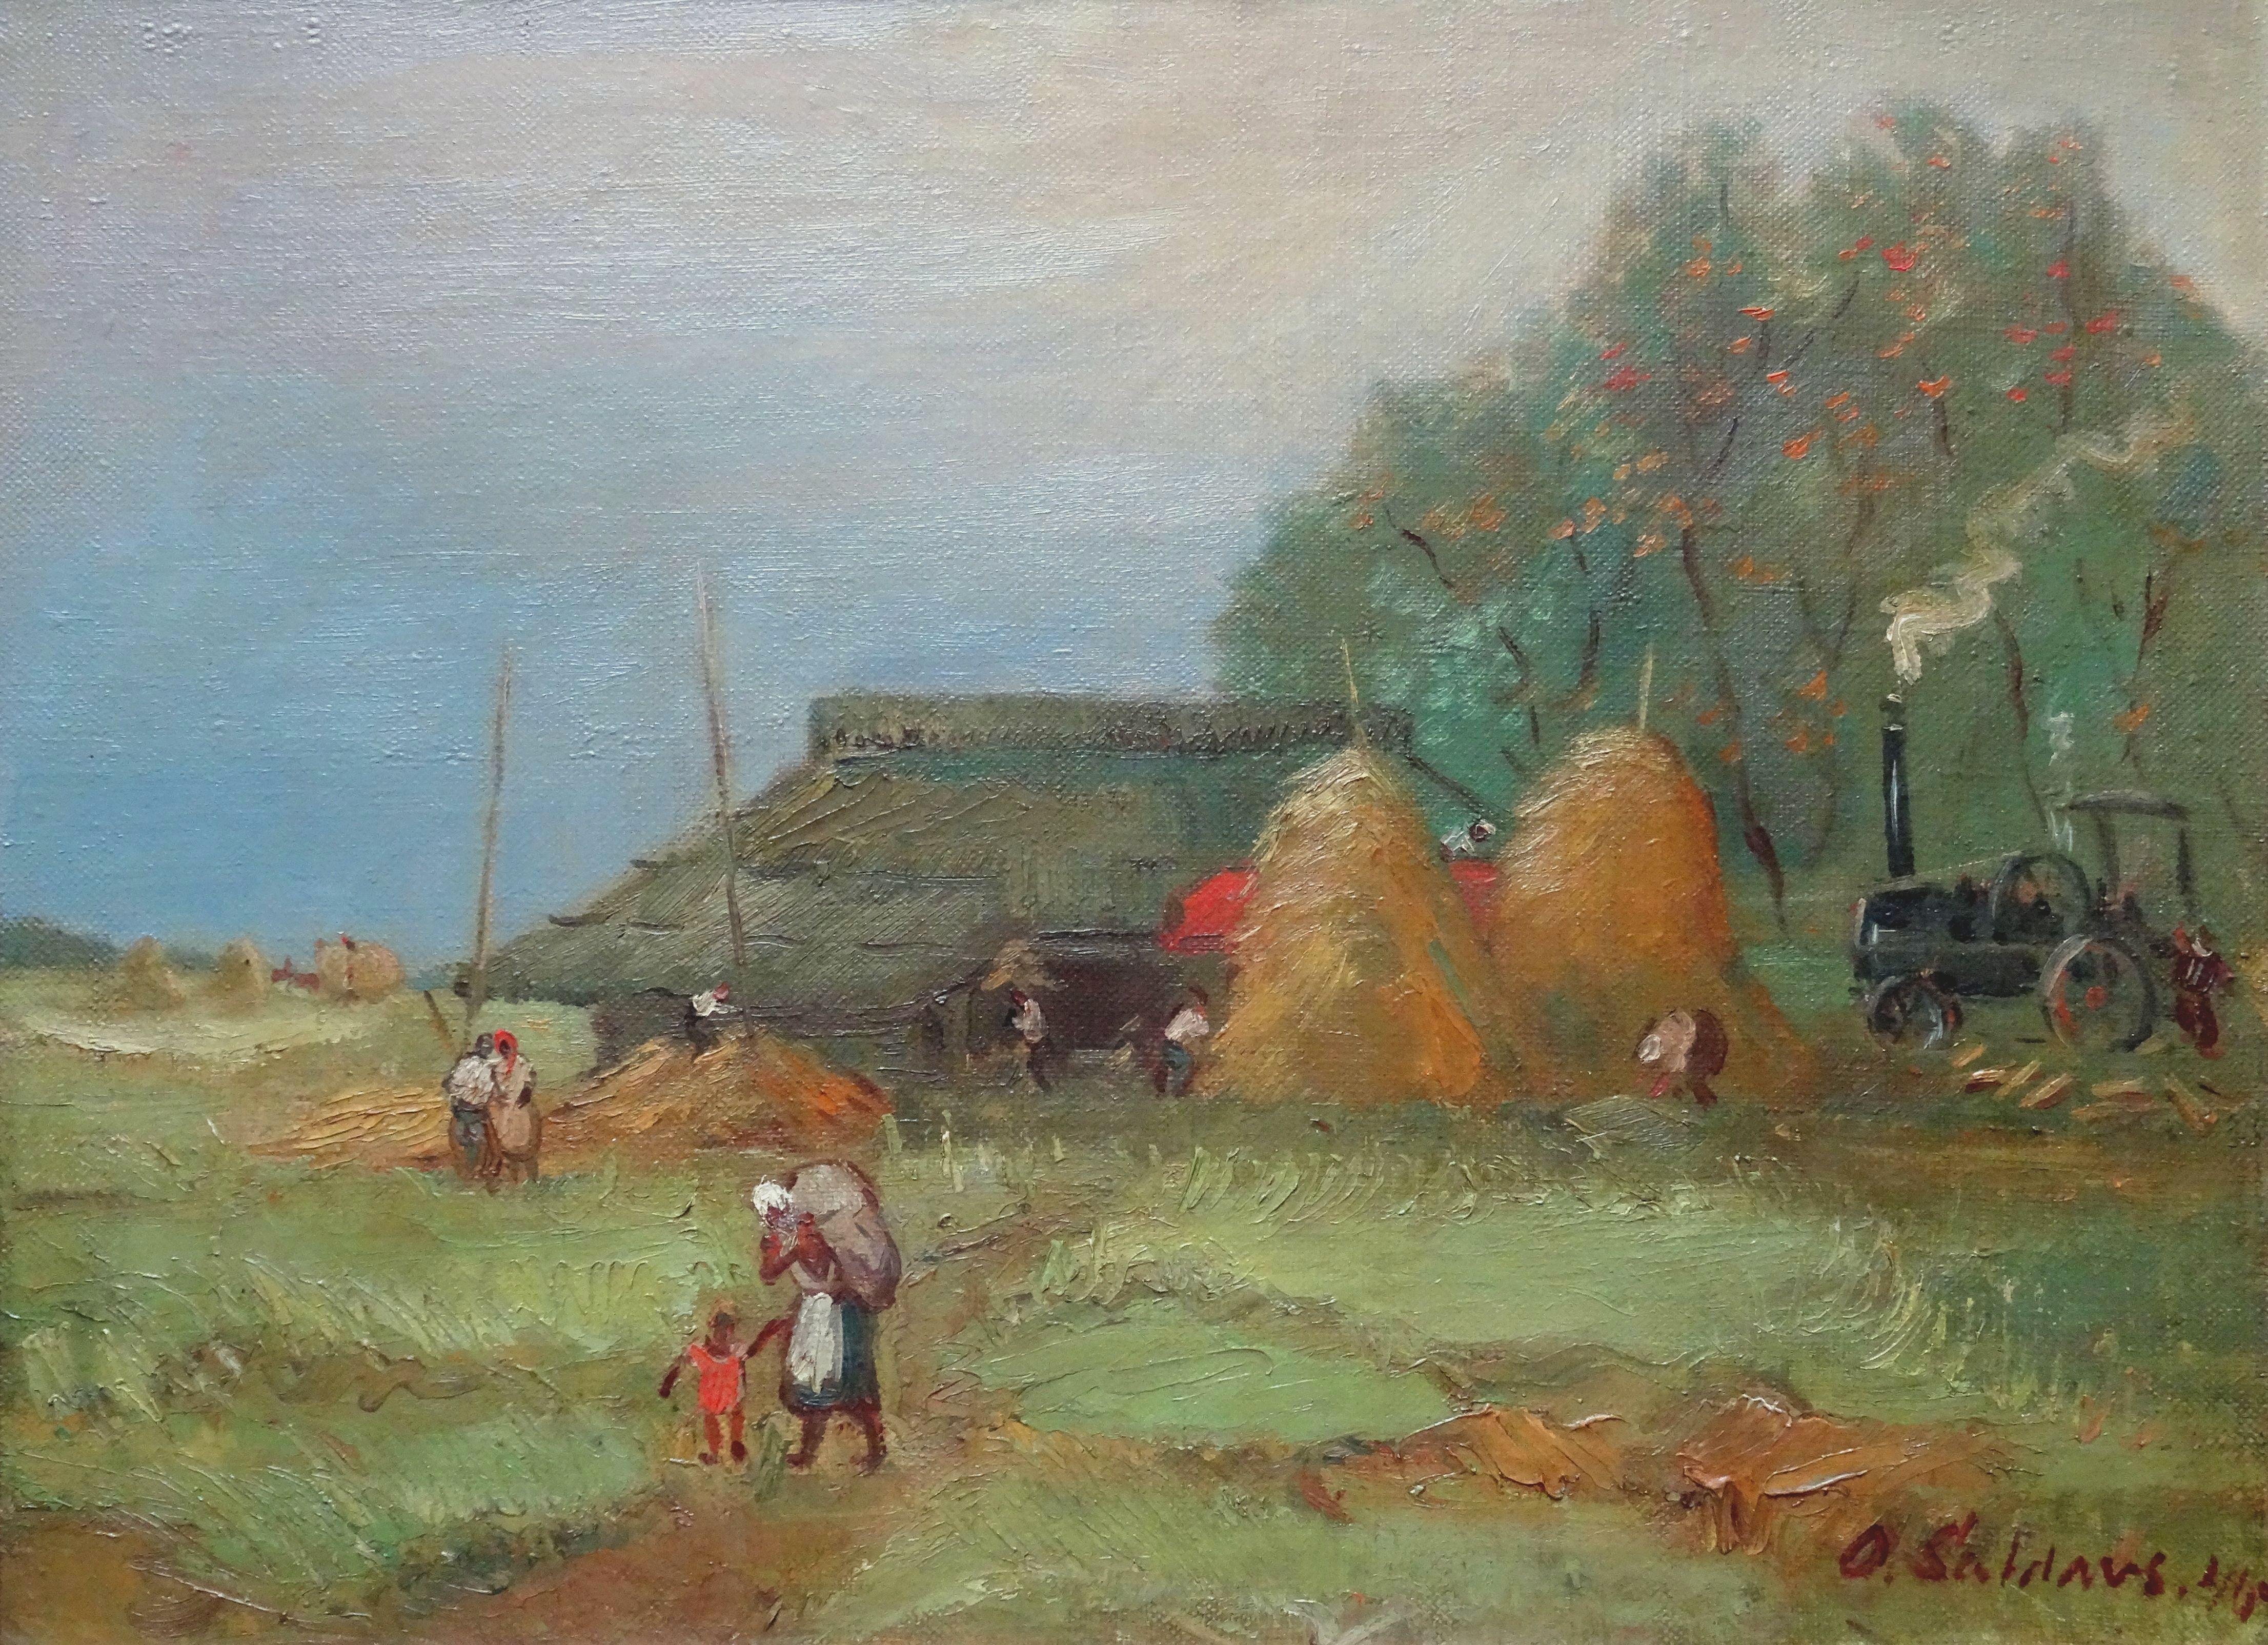 Threshing 1940. Canvas, oil. 54.5x73.5 cm